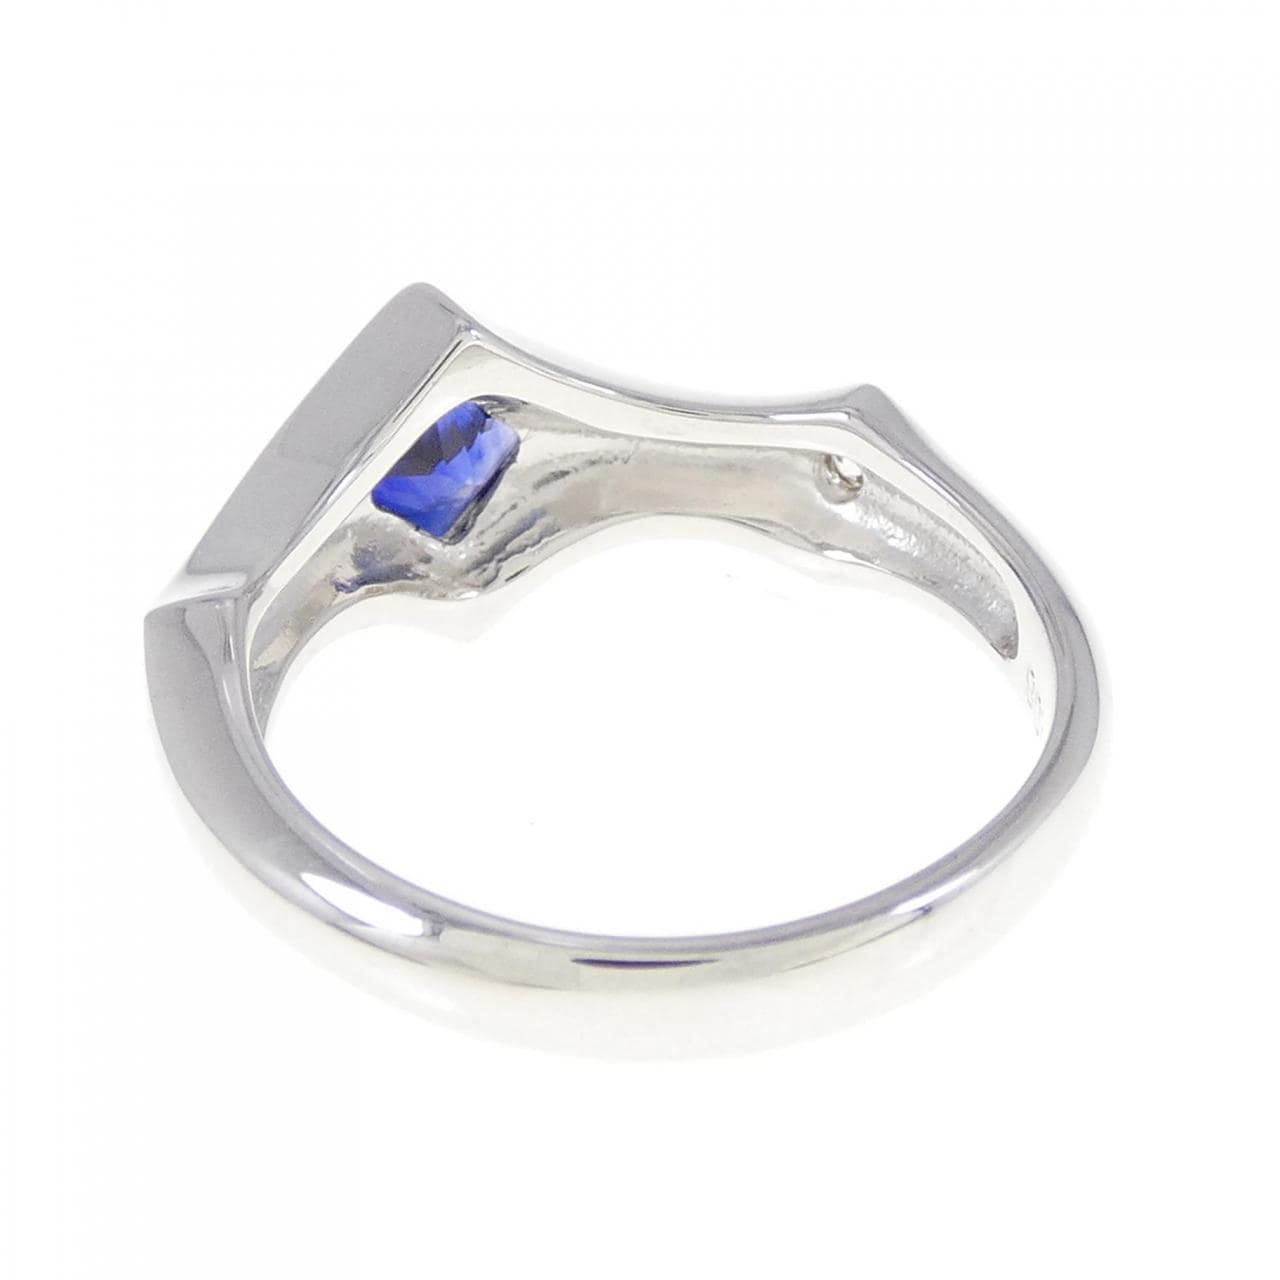 K18WG sapphire ring 0.45CT